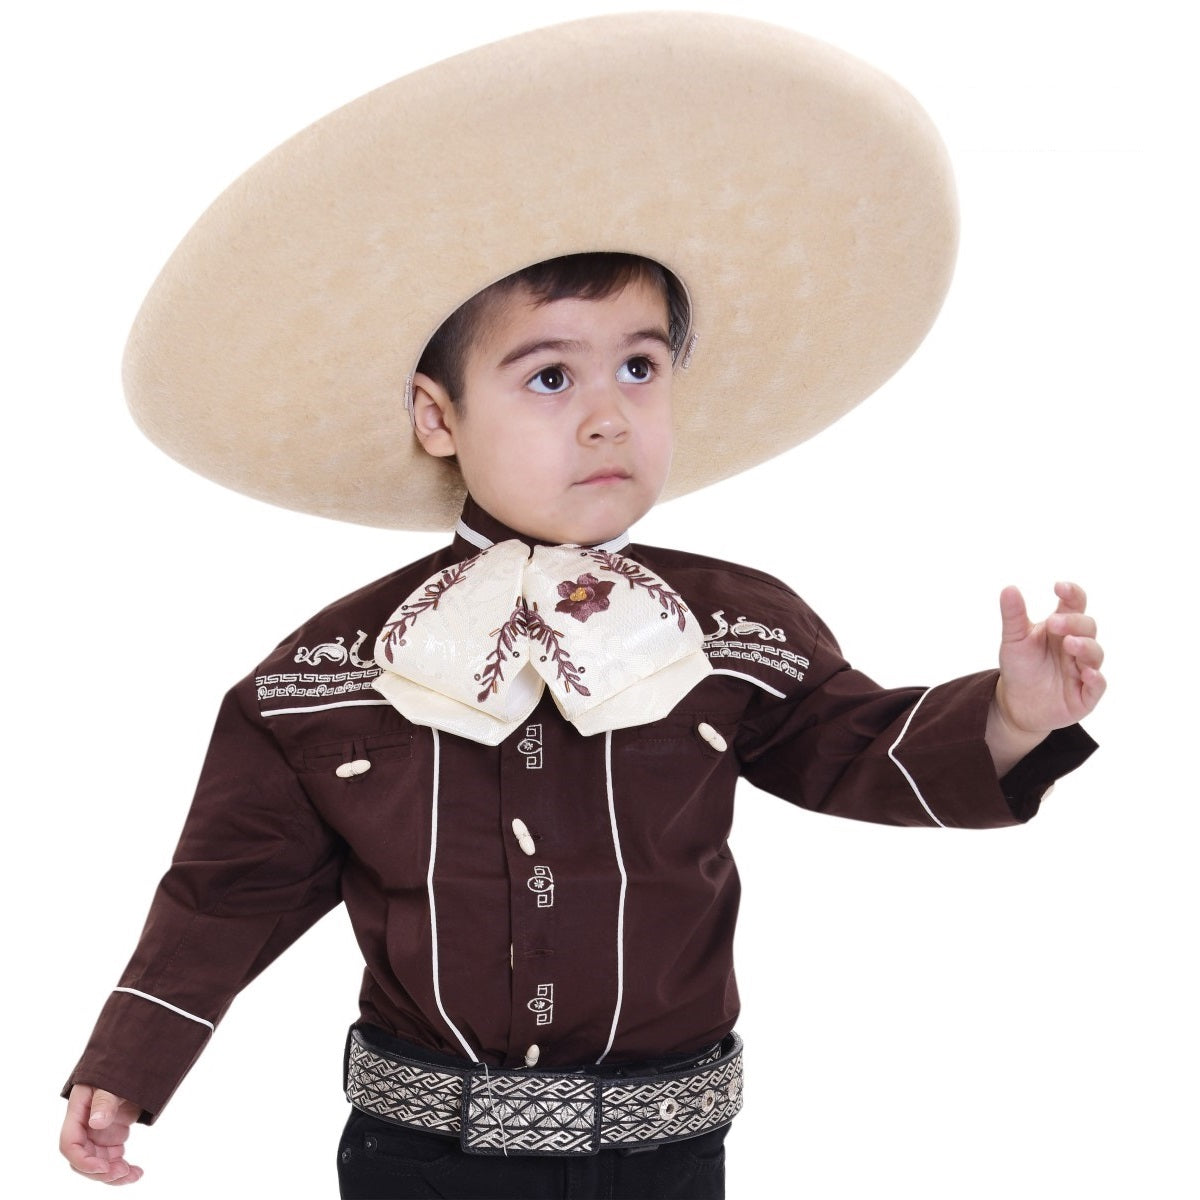 Camisa de Charro para Niño KS-TM-WD070-940 - Charro Shirt for Kids